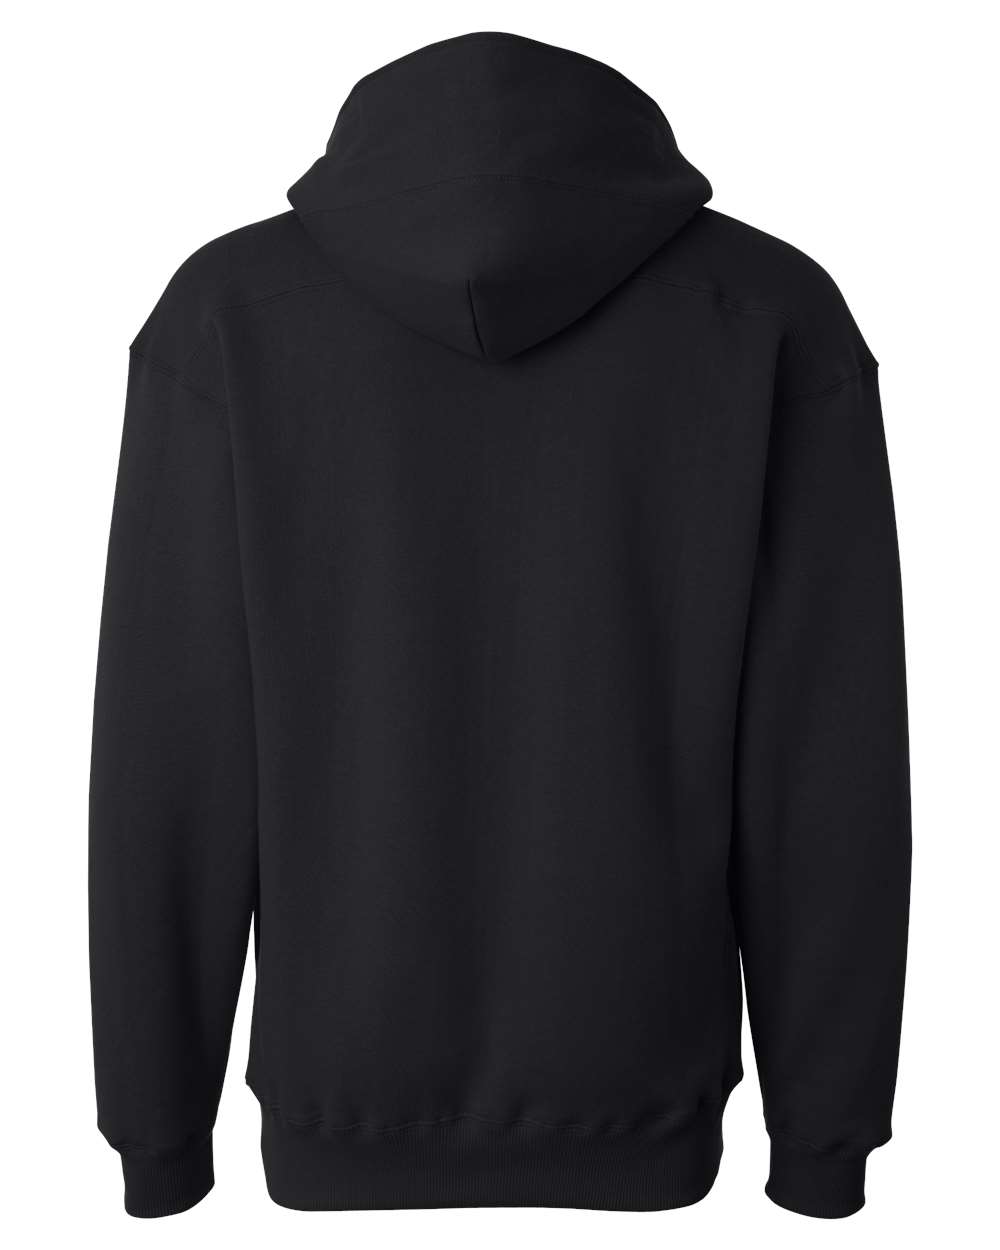 J America Mens Blank Sport Lace Hooded Sweatshirt 8830 up to 3XL | eBay